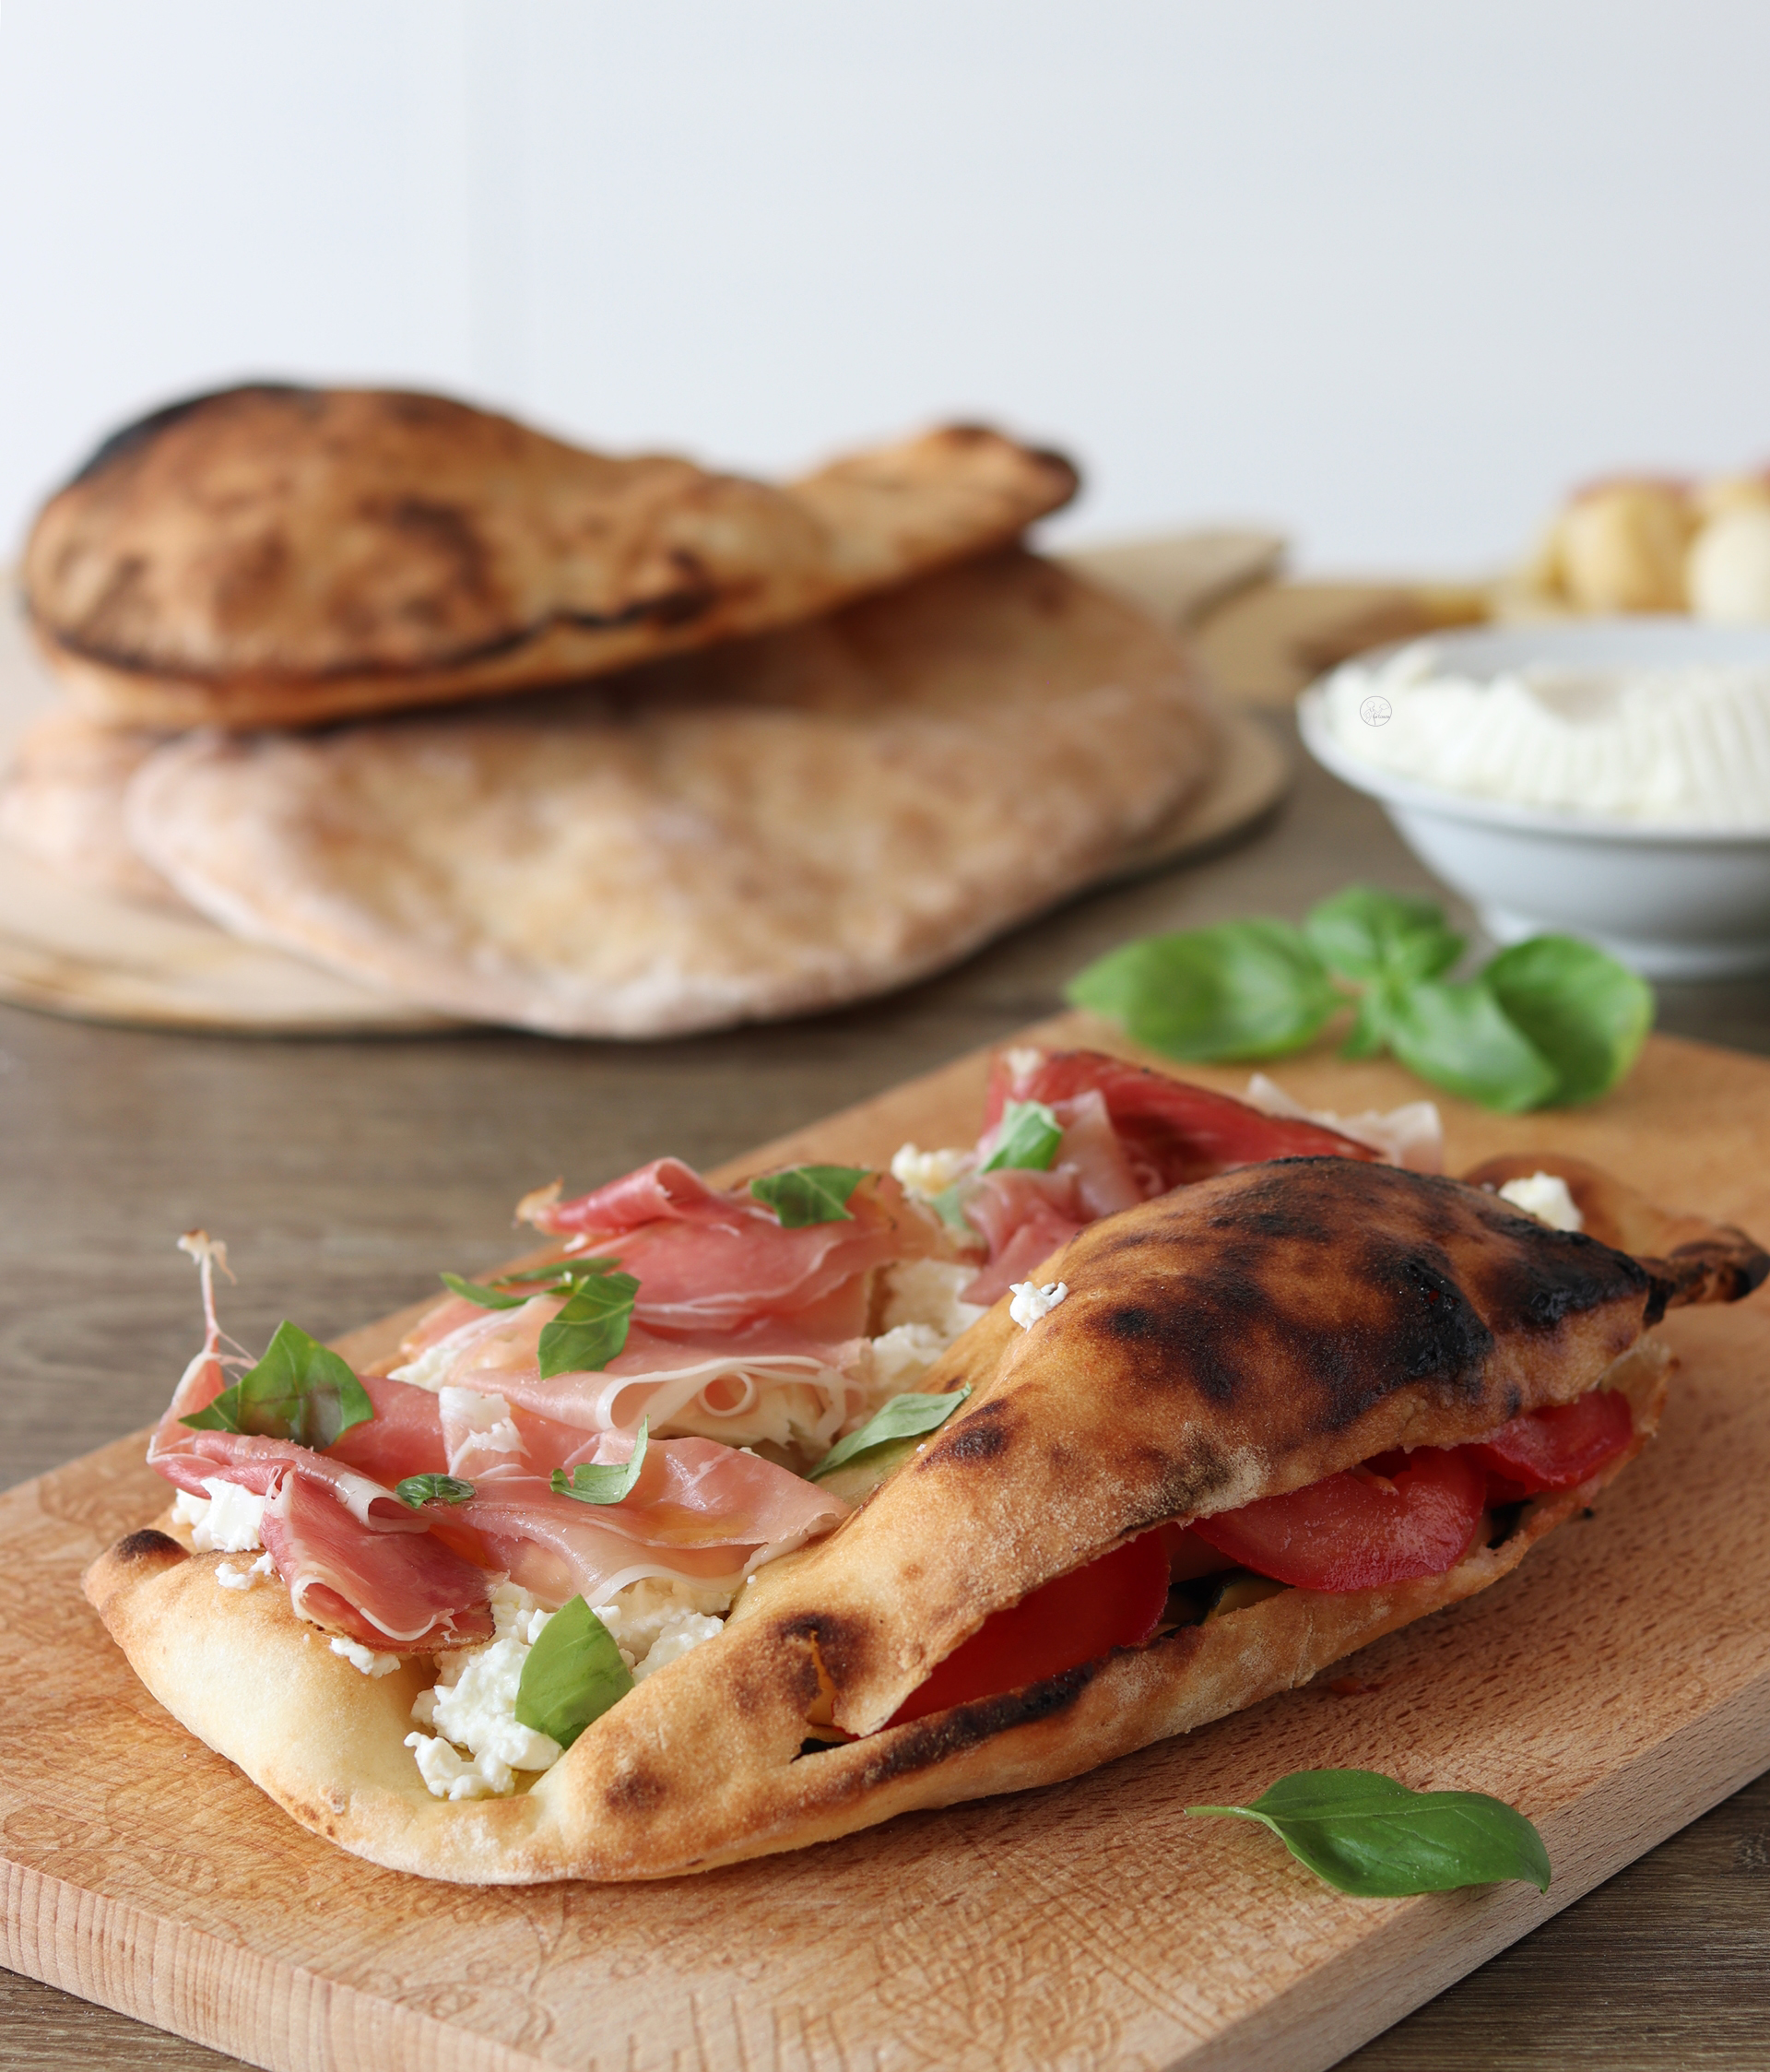 Pizza Panuozzo sans gluten - La Cassata Celiaca